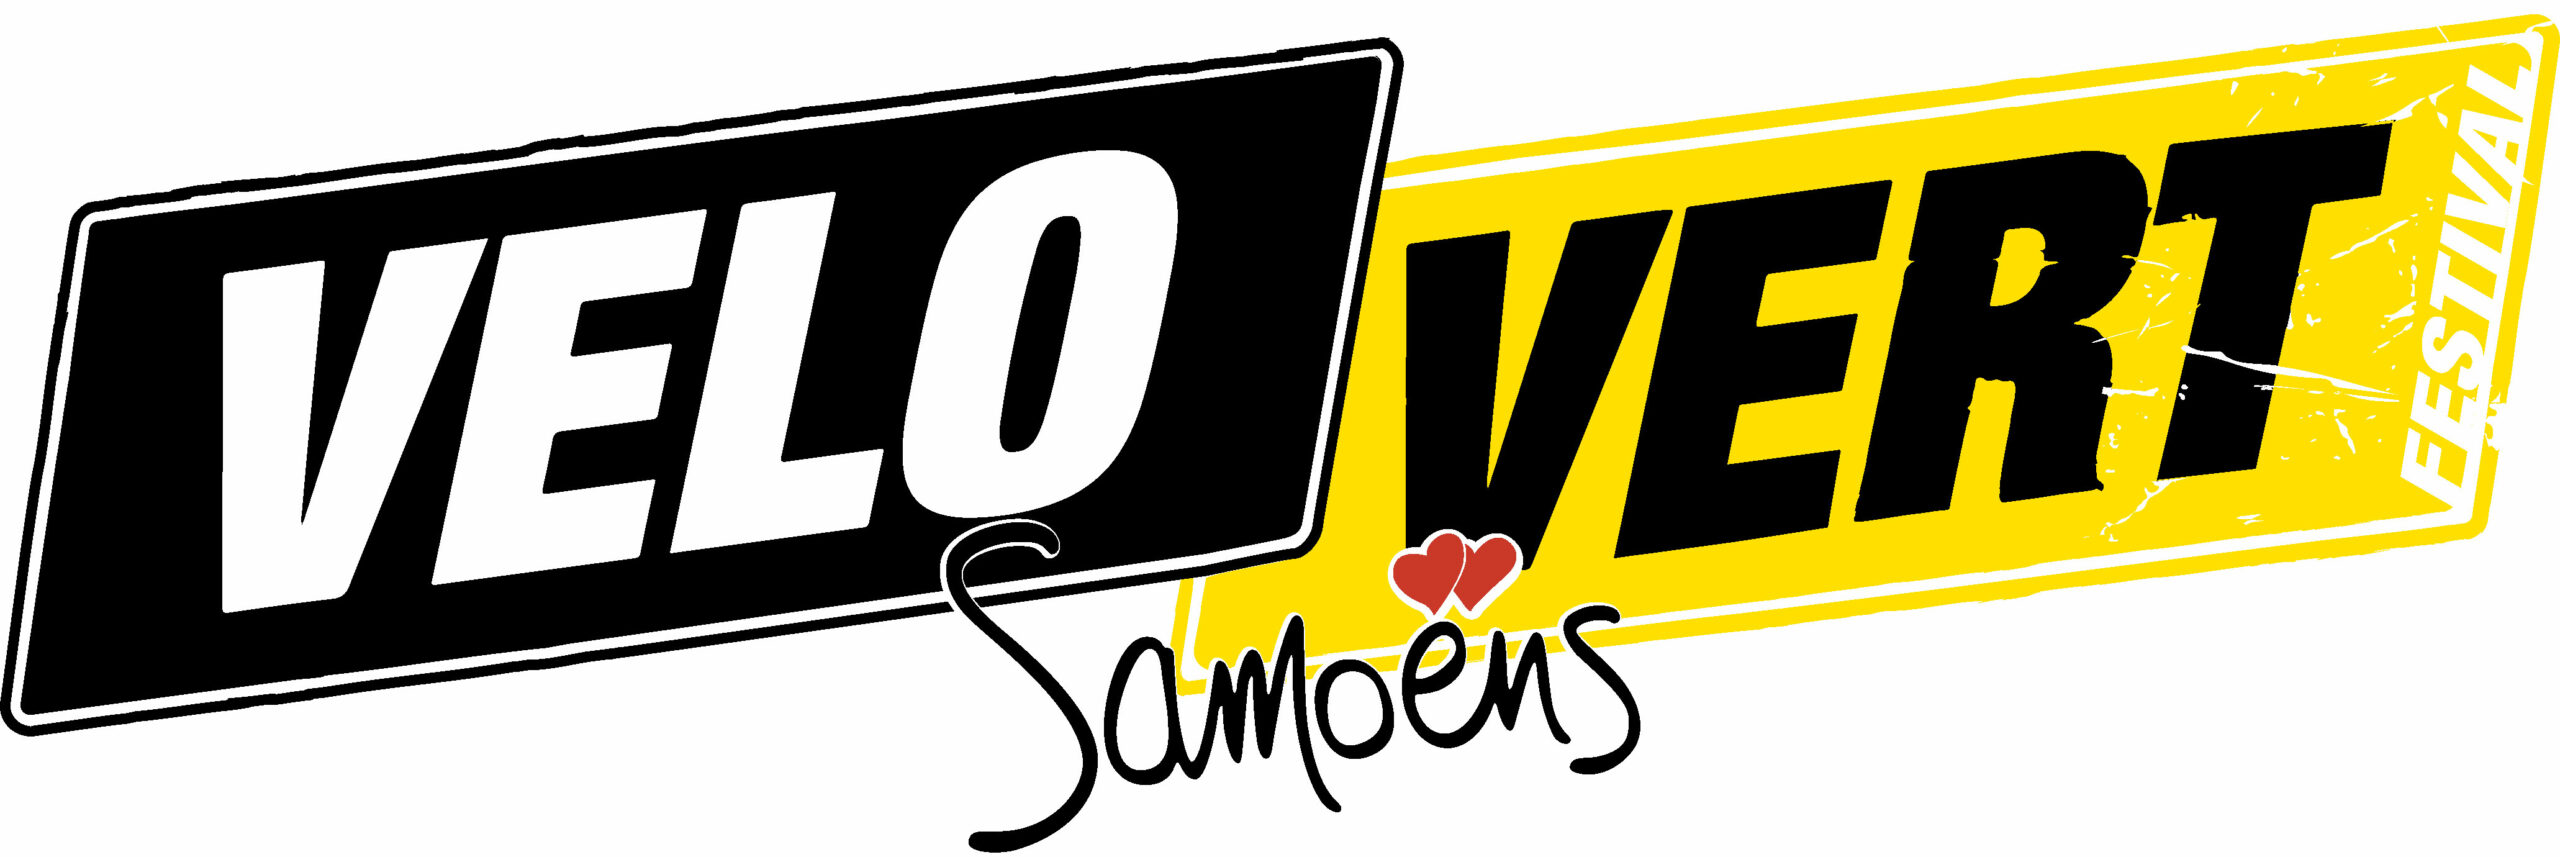 Logo officiel du Vélo Vert Festival à Samöens